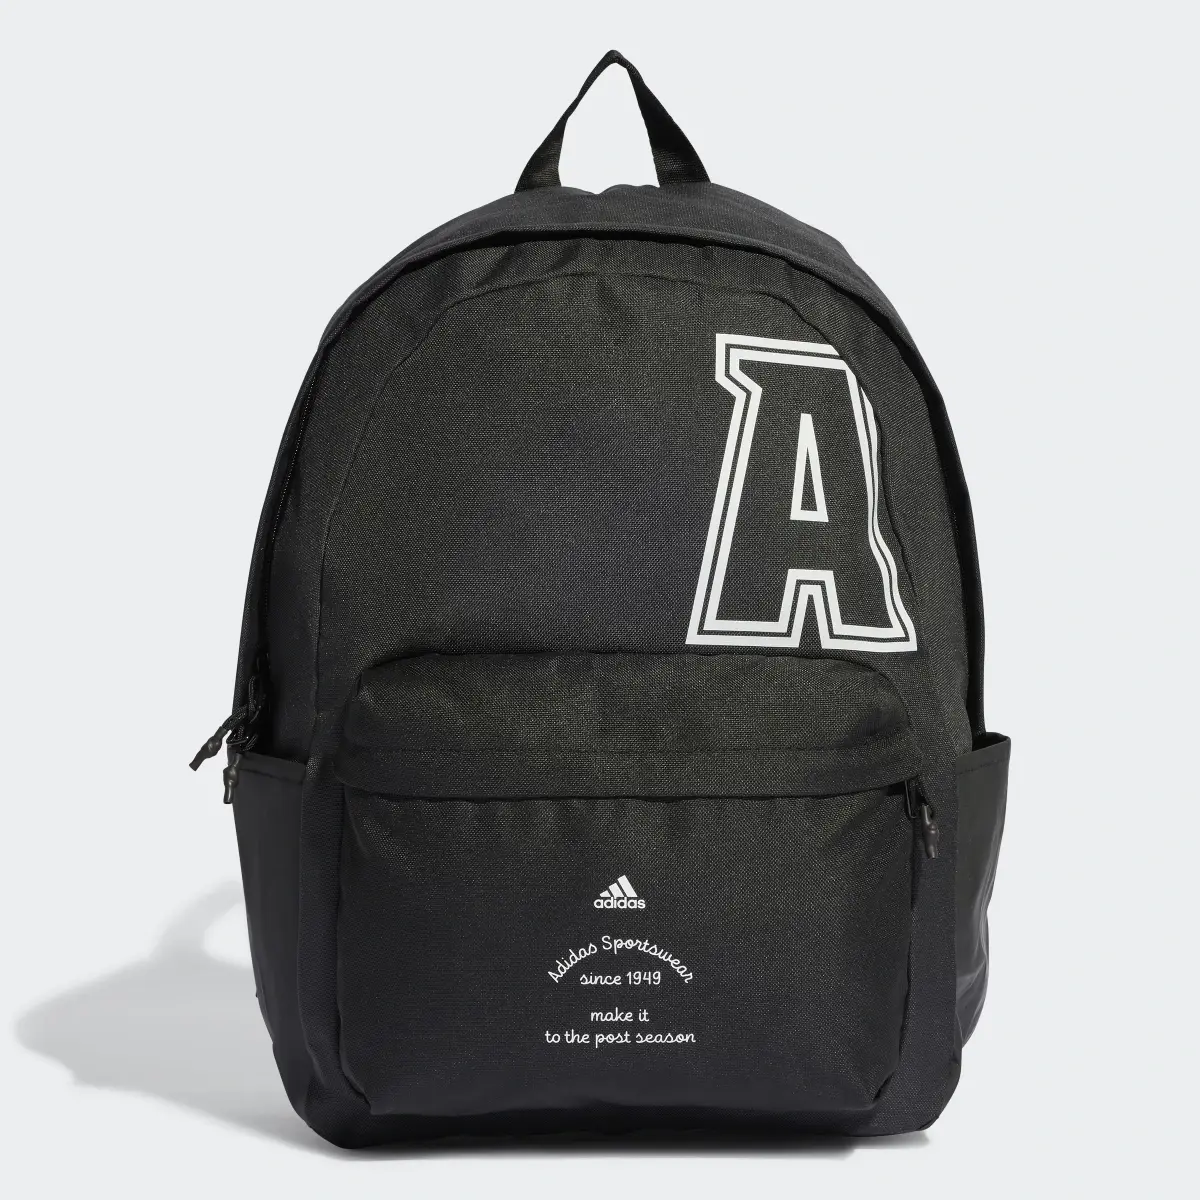 Adidas Classic Brand Love Initial Print Backpack. 1